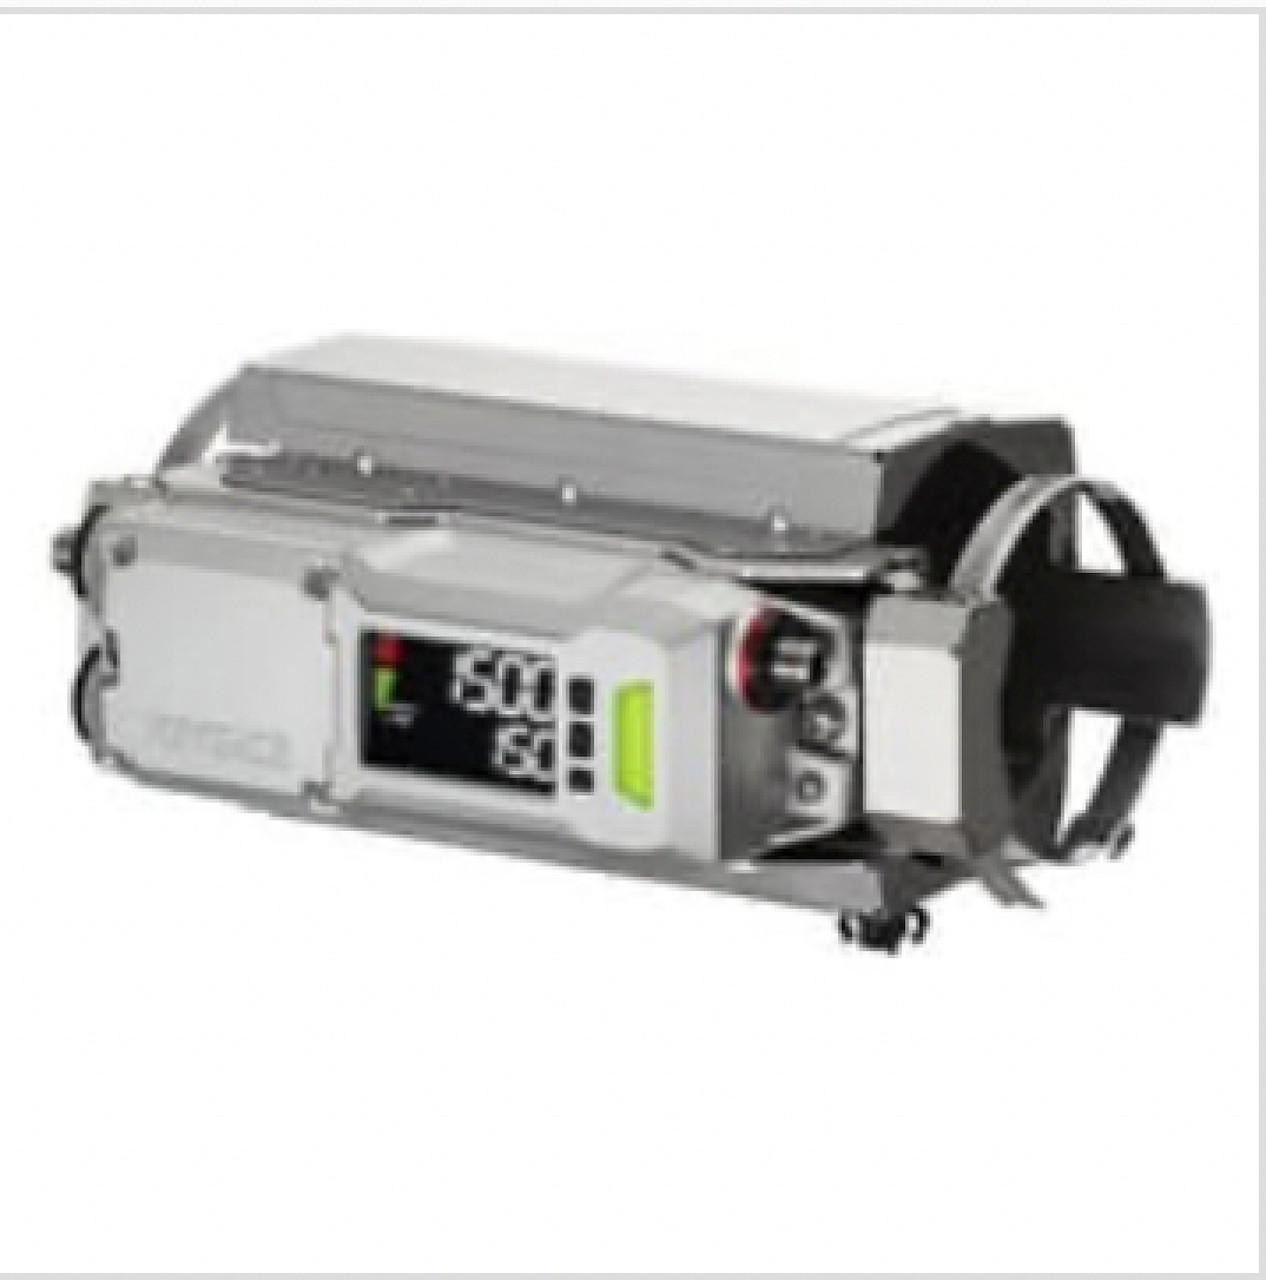 Keyence FD-R80 Flow Sensors / Flow Meters, Sensor Main Unit, 65A/80A Type [Refurbished]